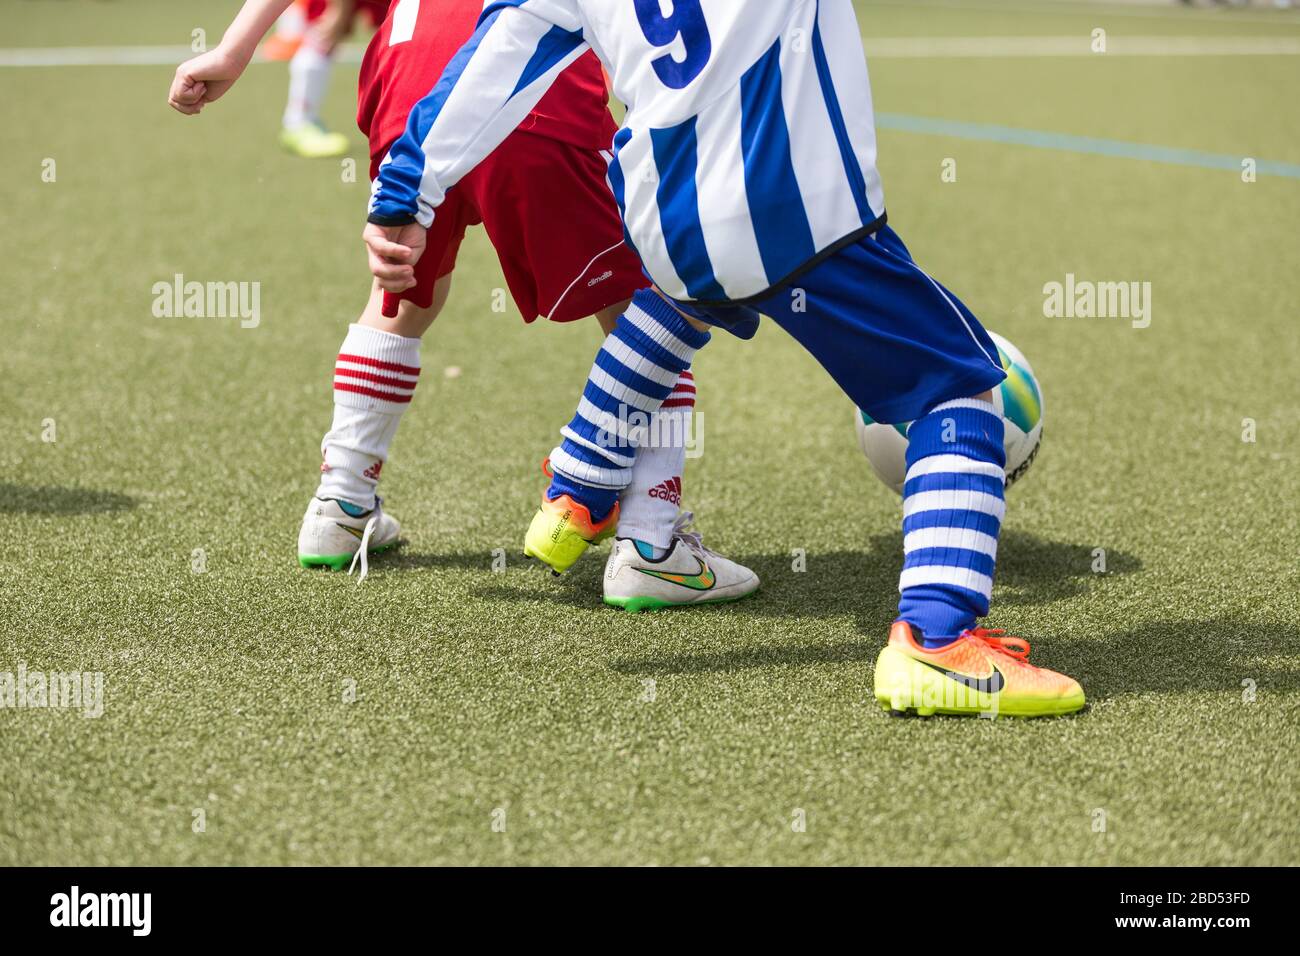 boys playing football on artificial turf Stock Photo